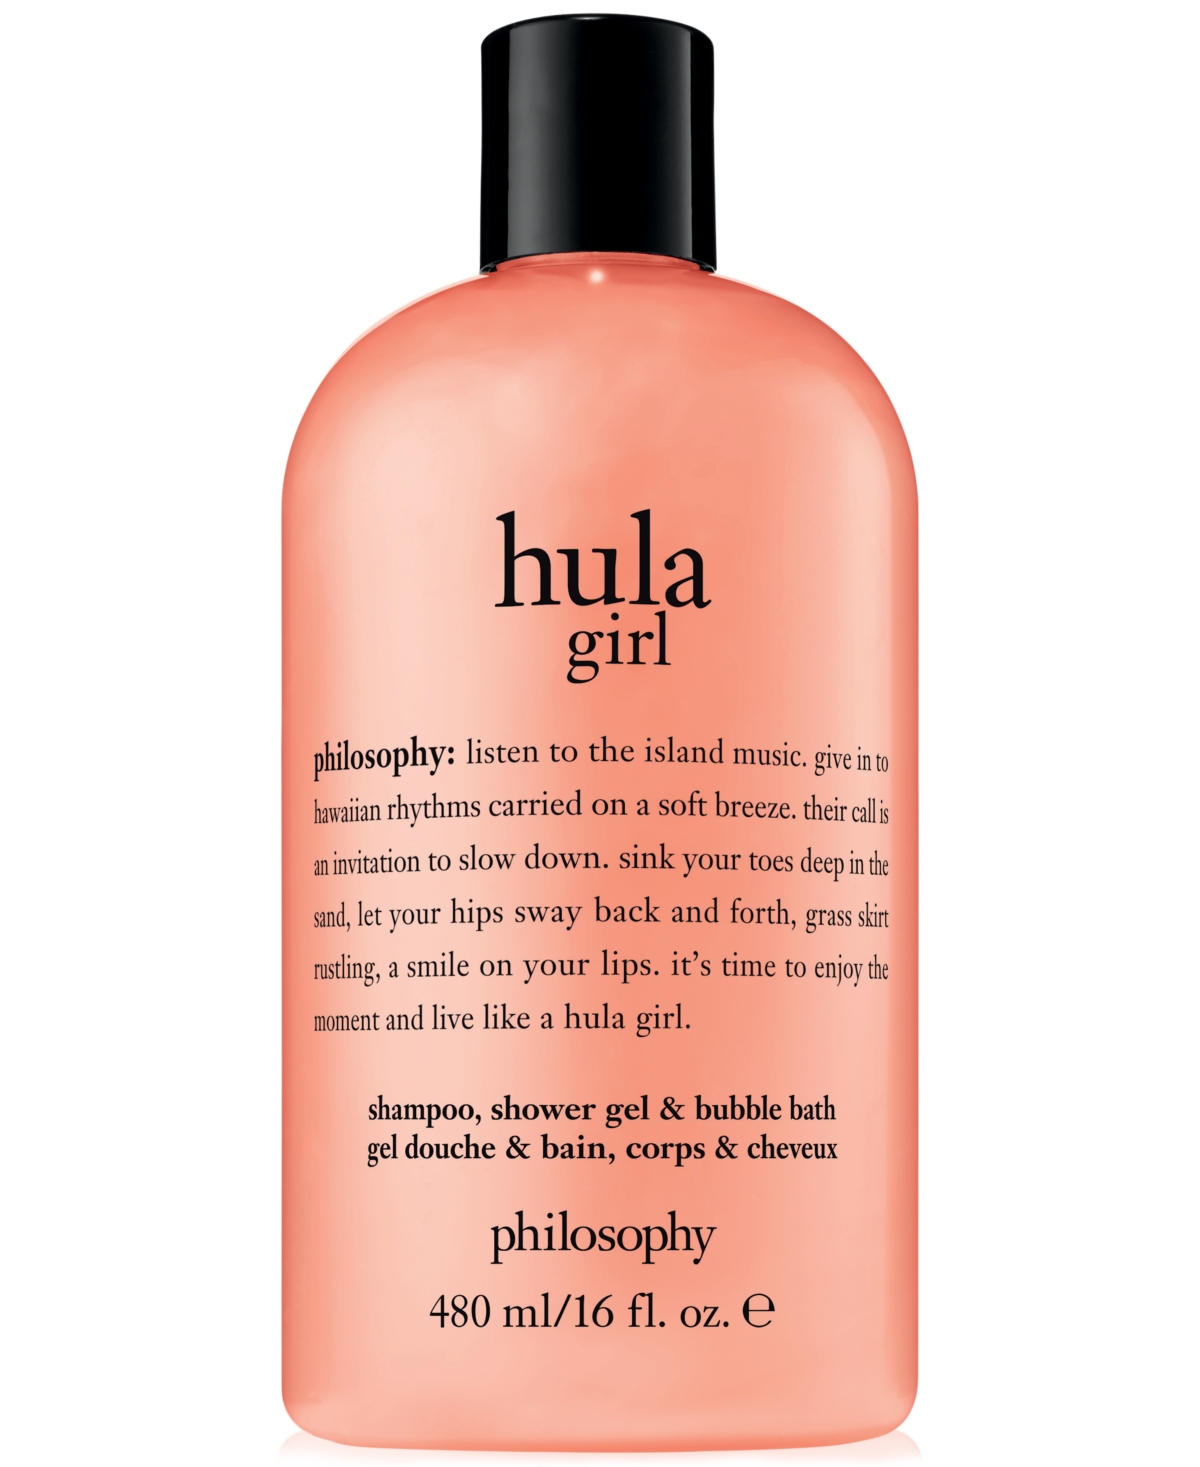 hula girl 3-in-1 shampoo, shower gel and bubble bath, 16-oz.